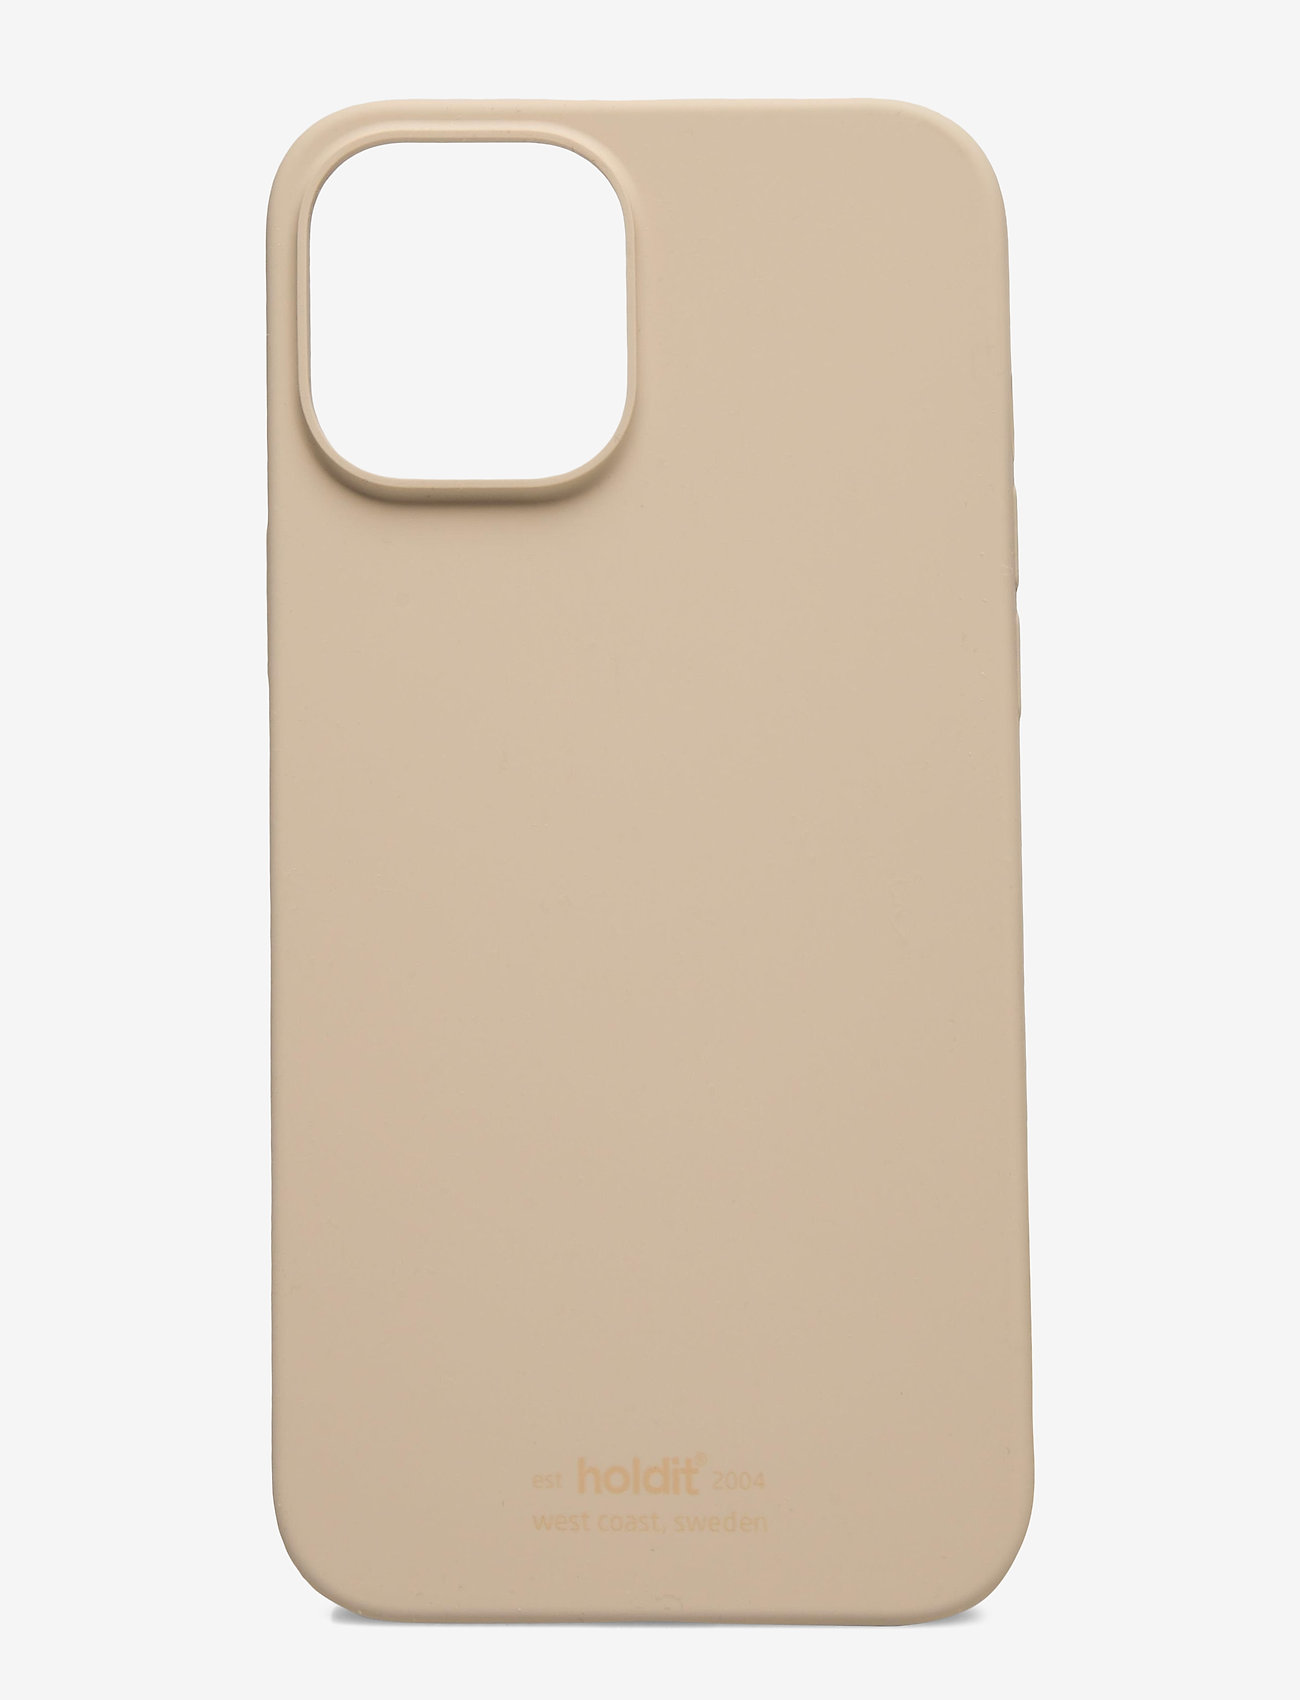 Holdit - Silicone Case iPhone 12Pro Max - madalaimad hinnad - beige - 0